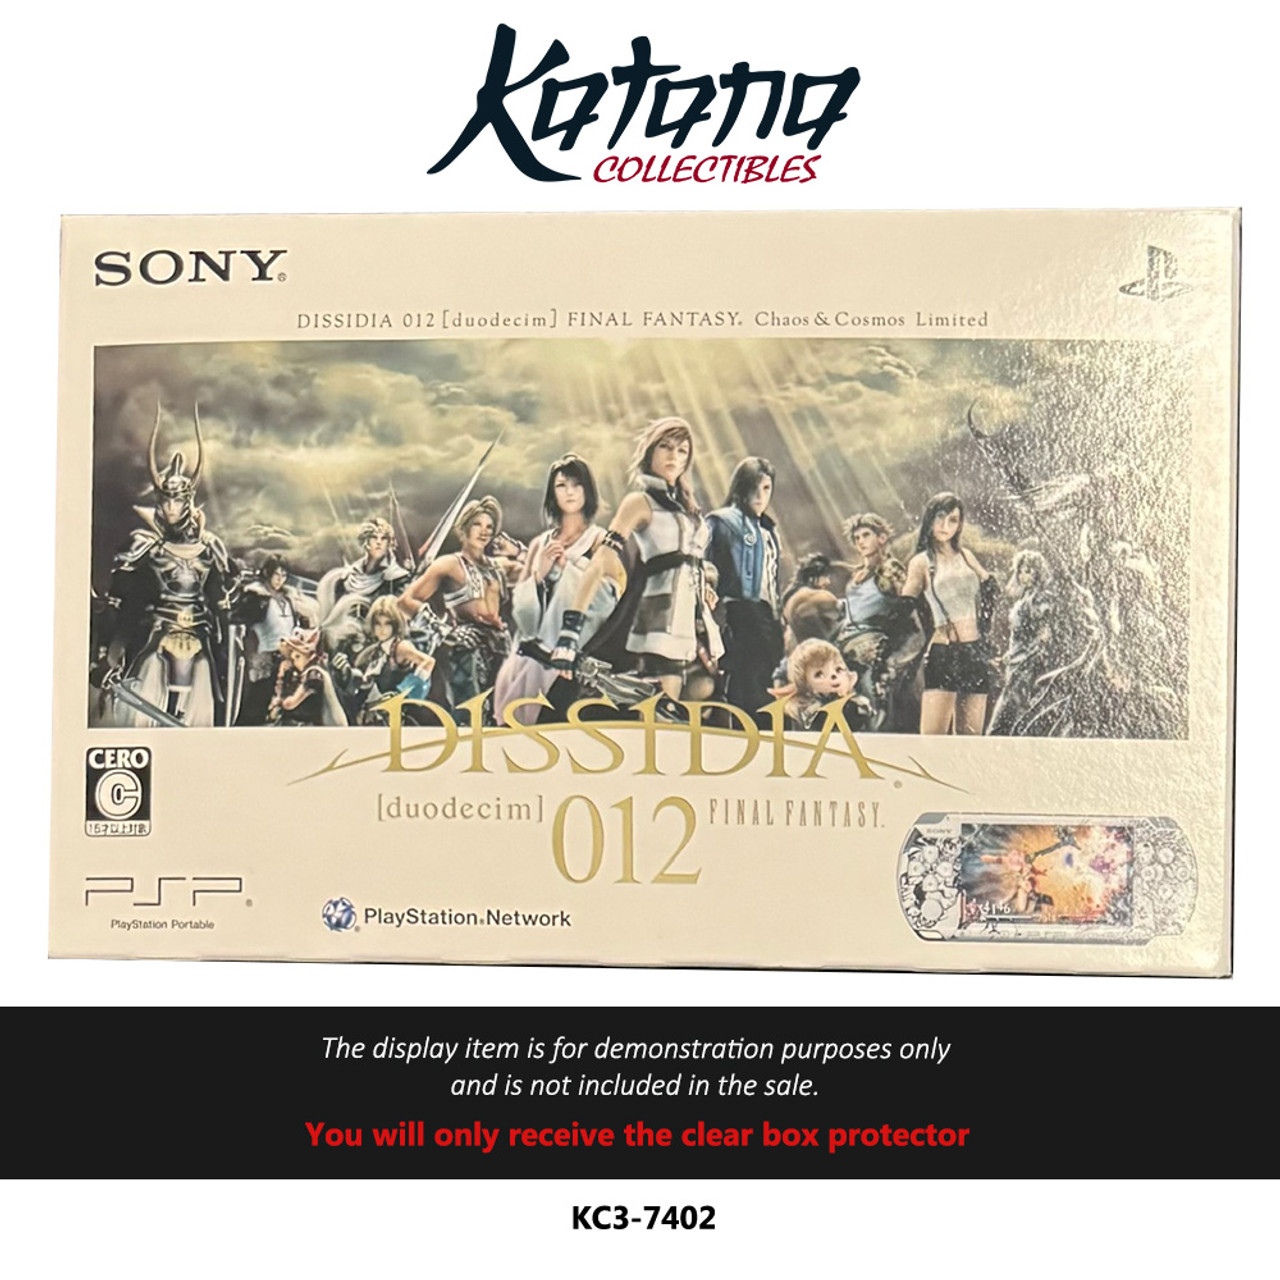 Katana Collectibles Protector For Sony Final Fantasy Dissidia 012 PSP 3000 Console